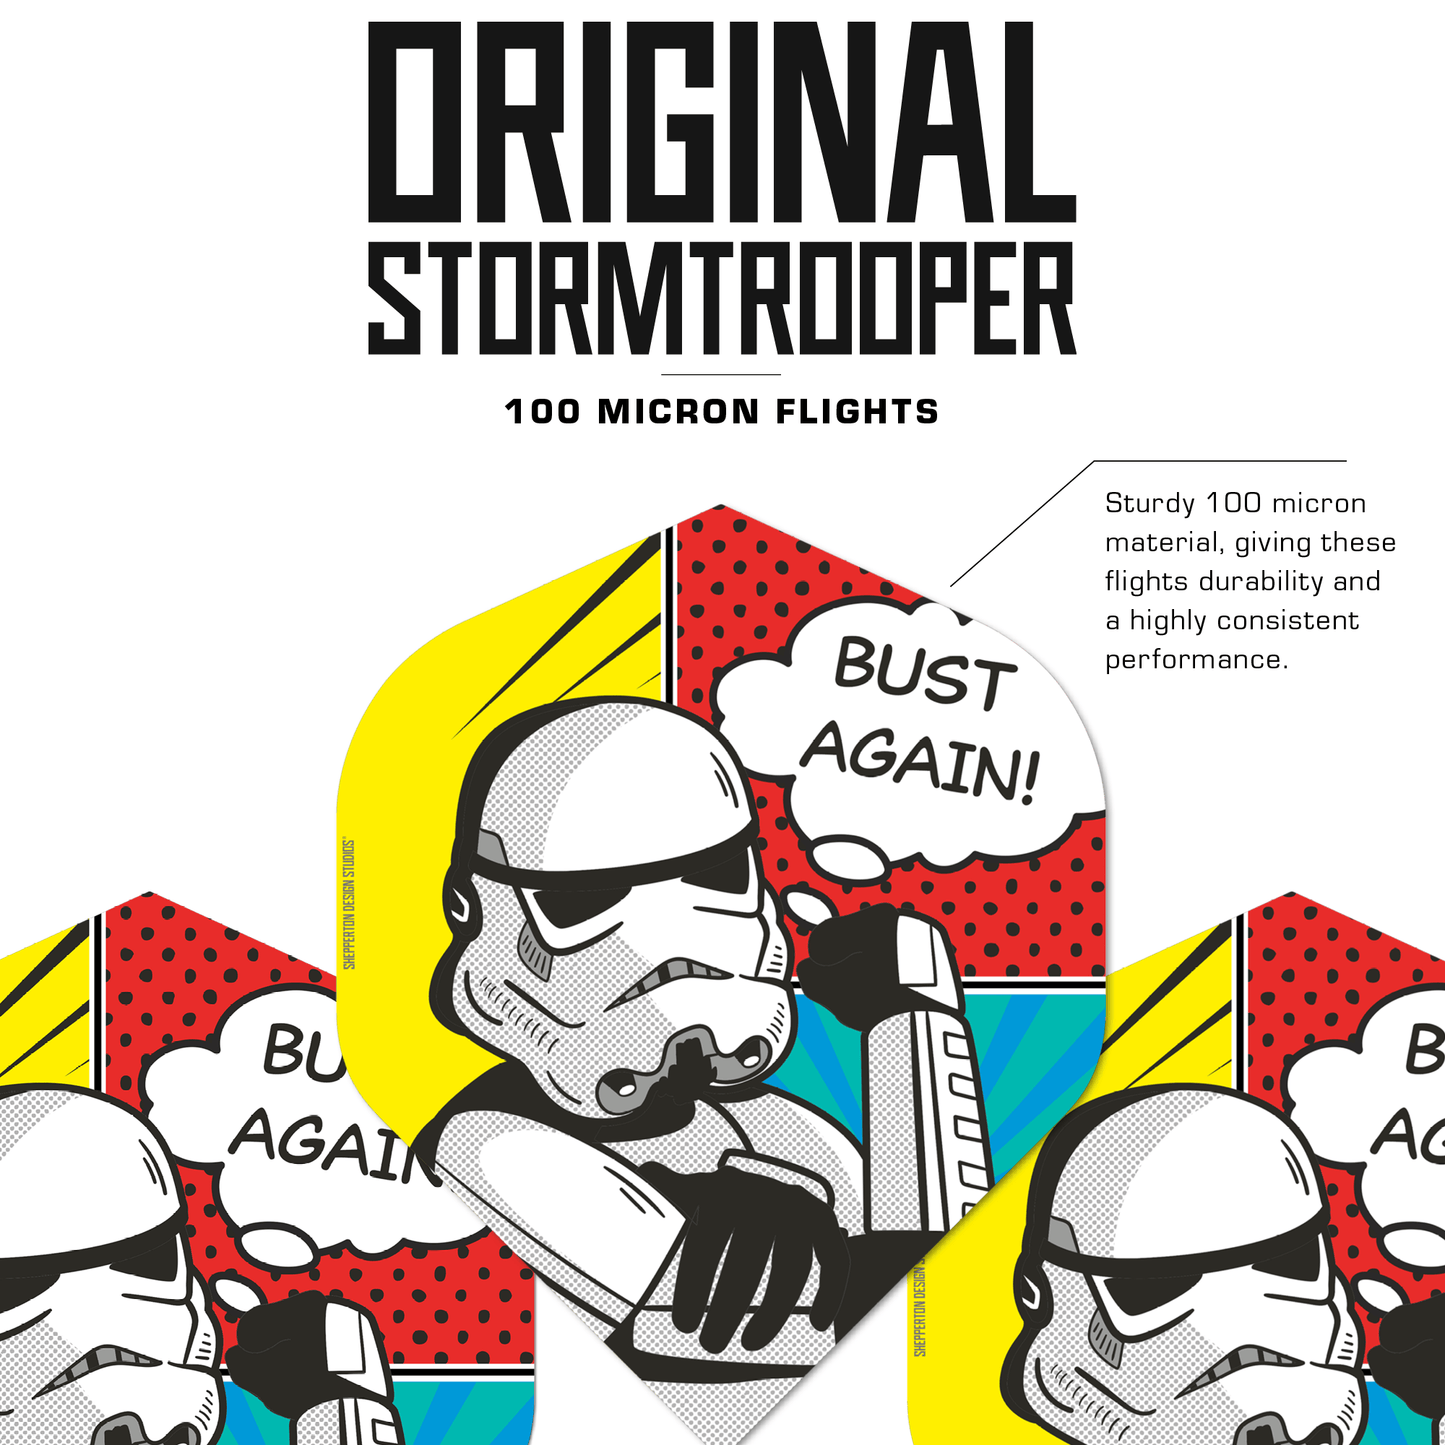 Original StormTrooper Dart Flights - Official Licensed - No2 - Std - Storm Trooper - Bust Again